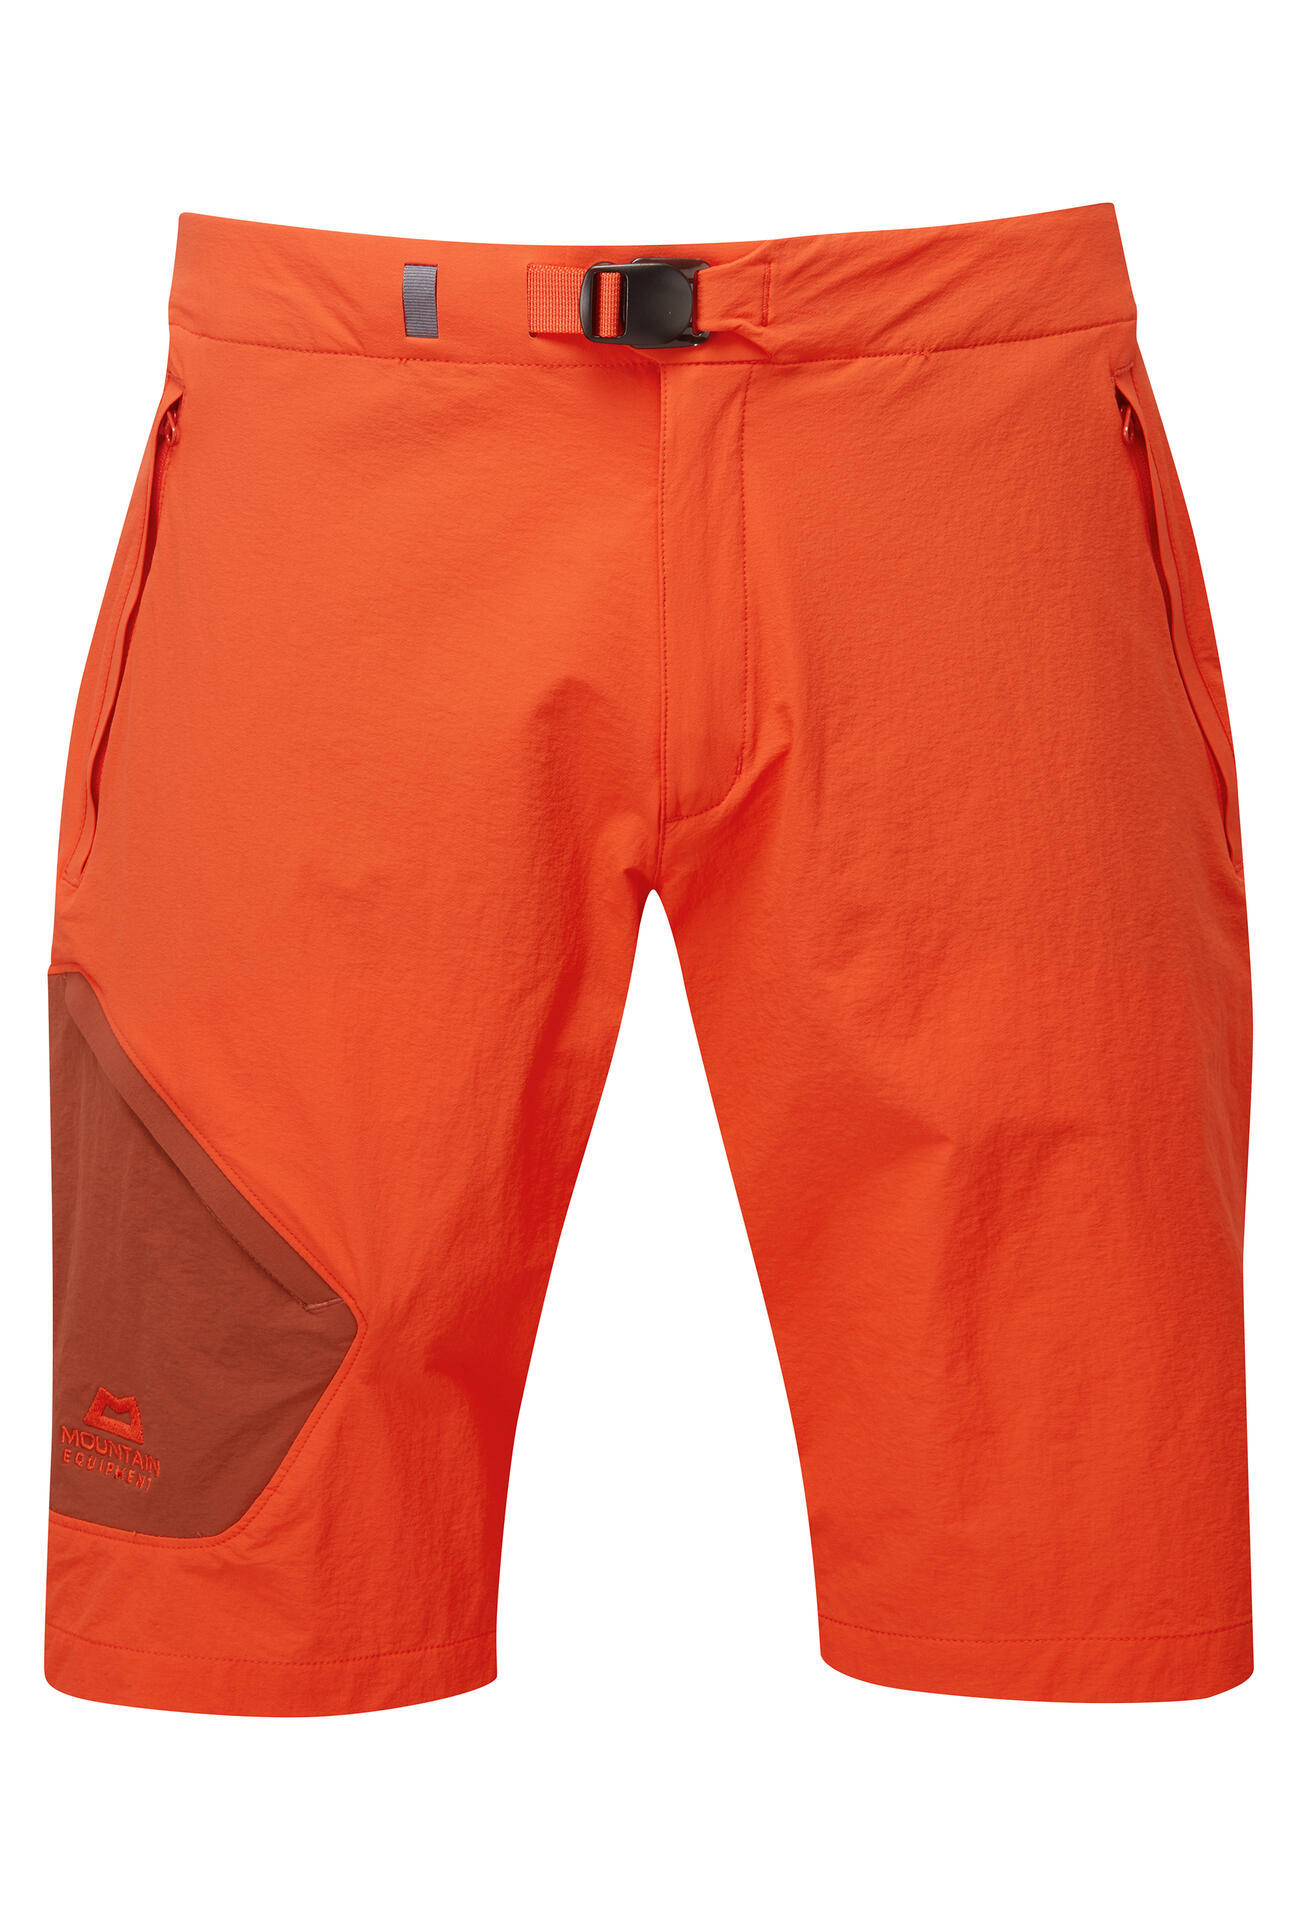 Mountain Equipment Comici Short Men'S Barva: Cardinal Orange/Burnt Henna, Velikost: L